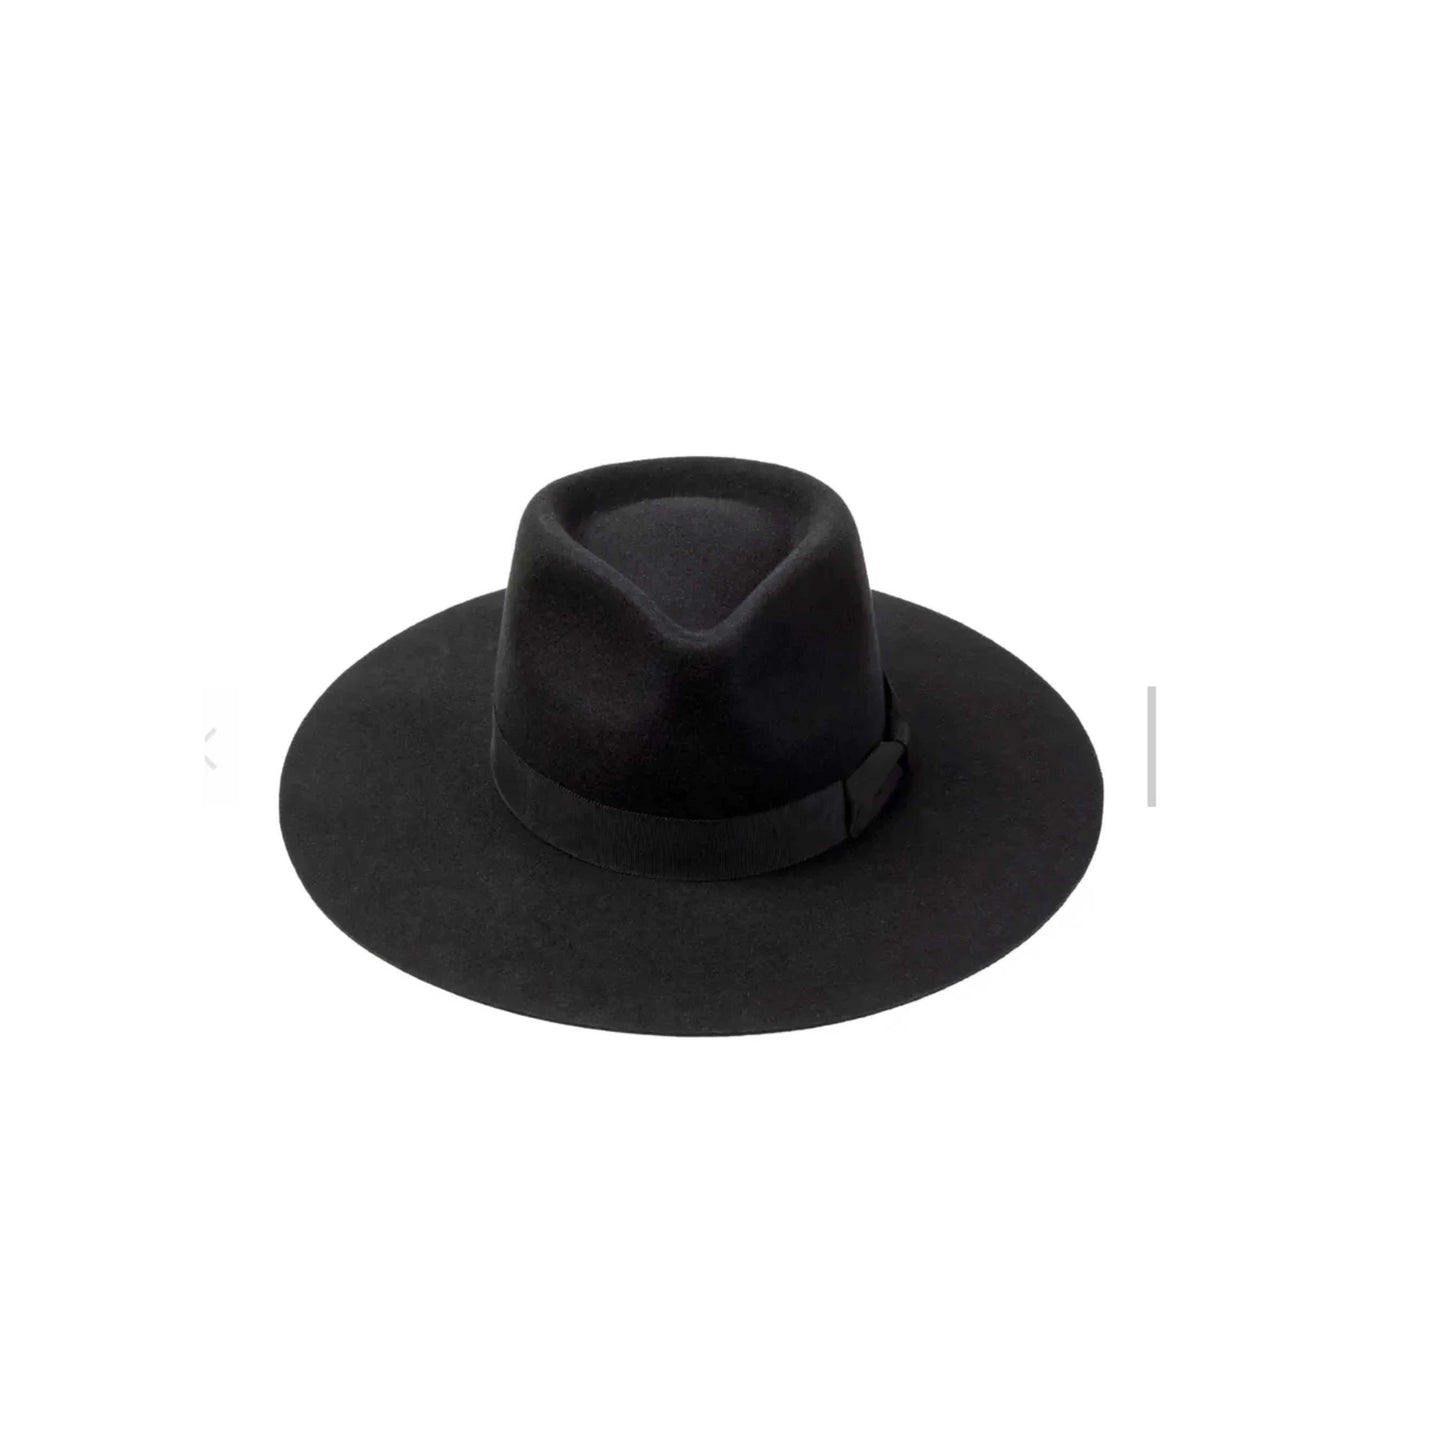 The Florence Custom Hat